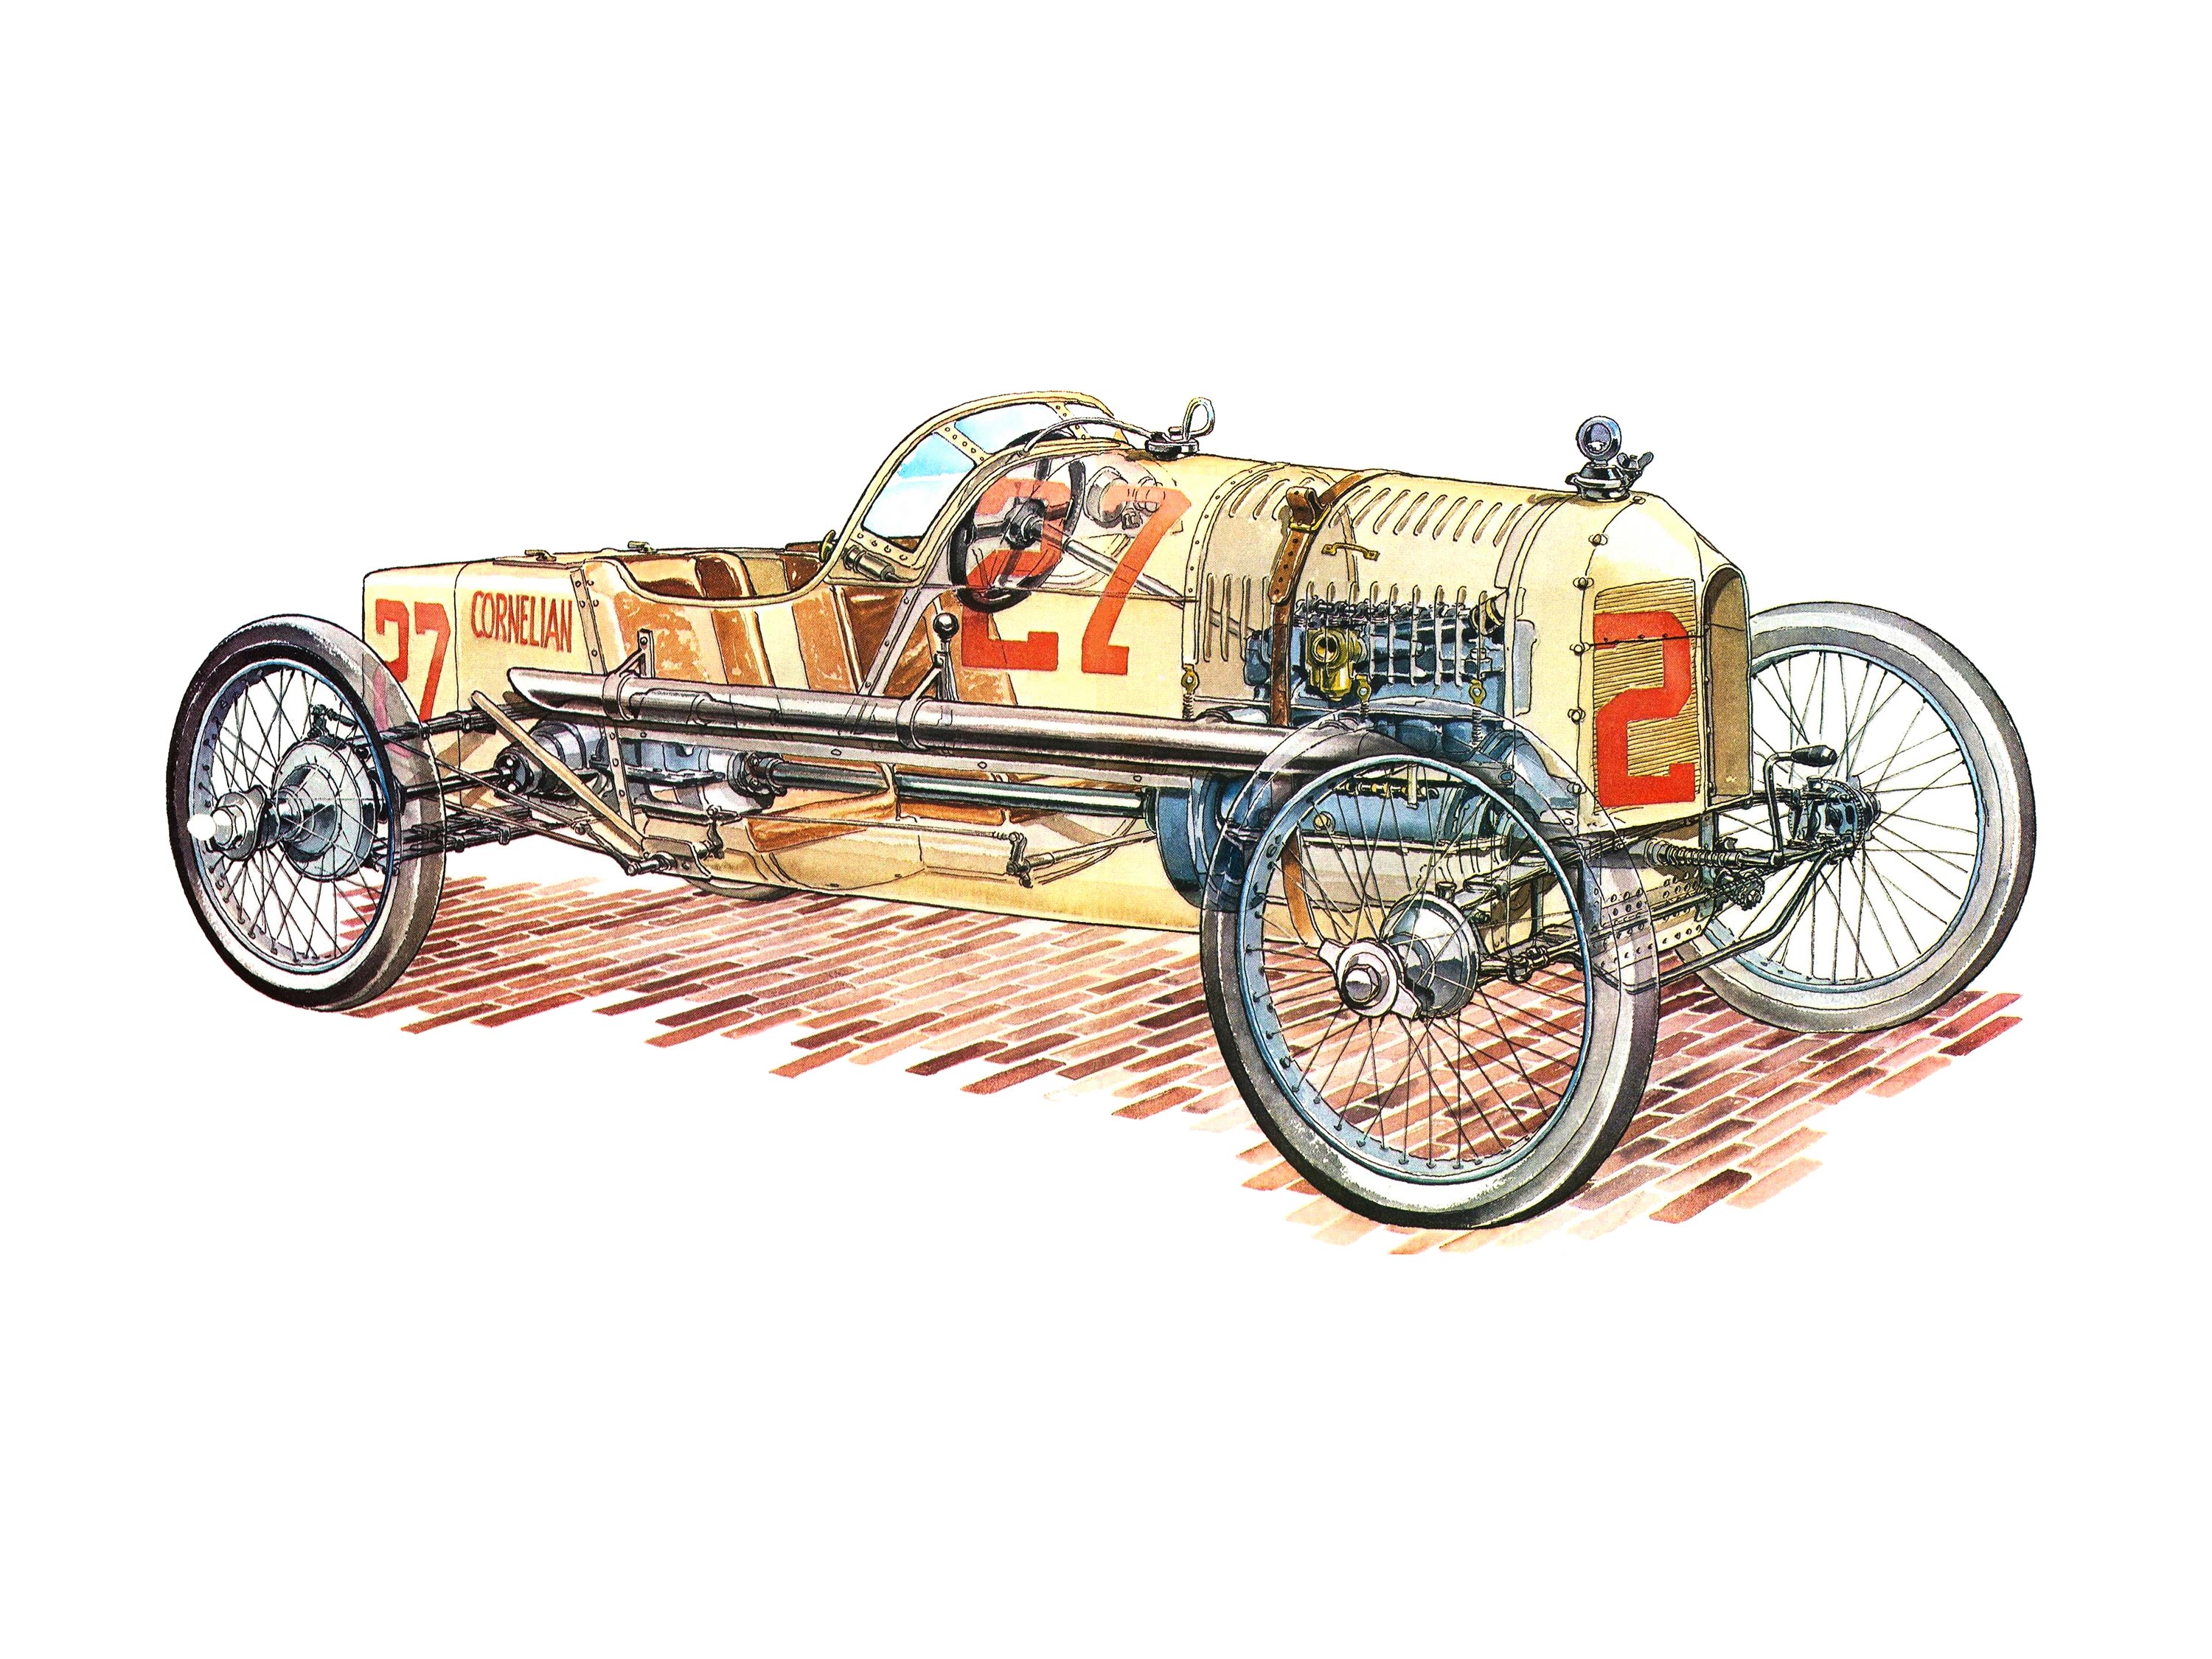 Cornelian Indy Race Car cutaway drawing